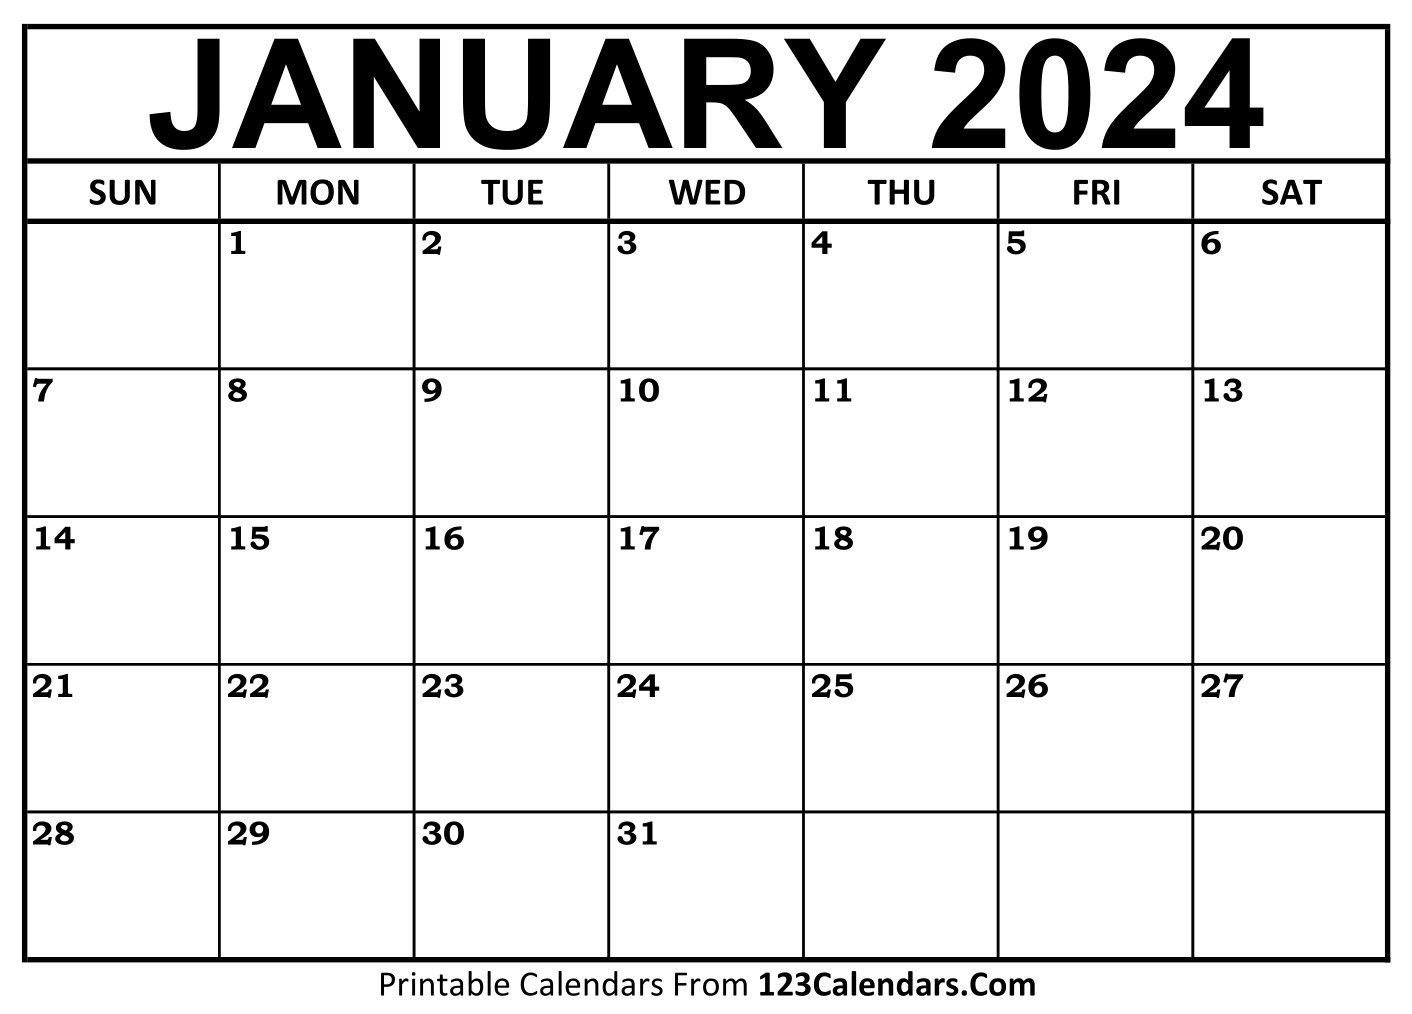 Printable January 2024 Calendar Templates - 123Calendars | Blank Calendar 2024 Printable